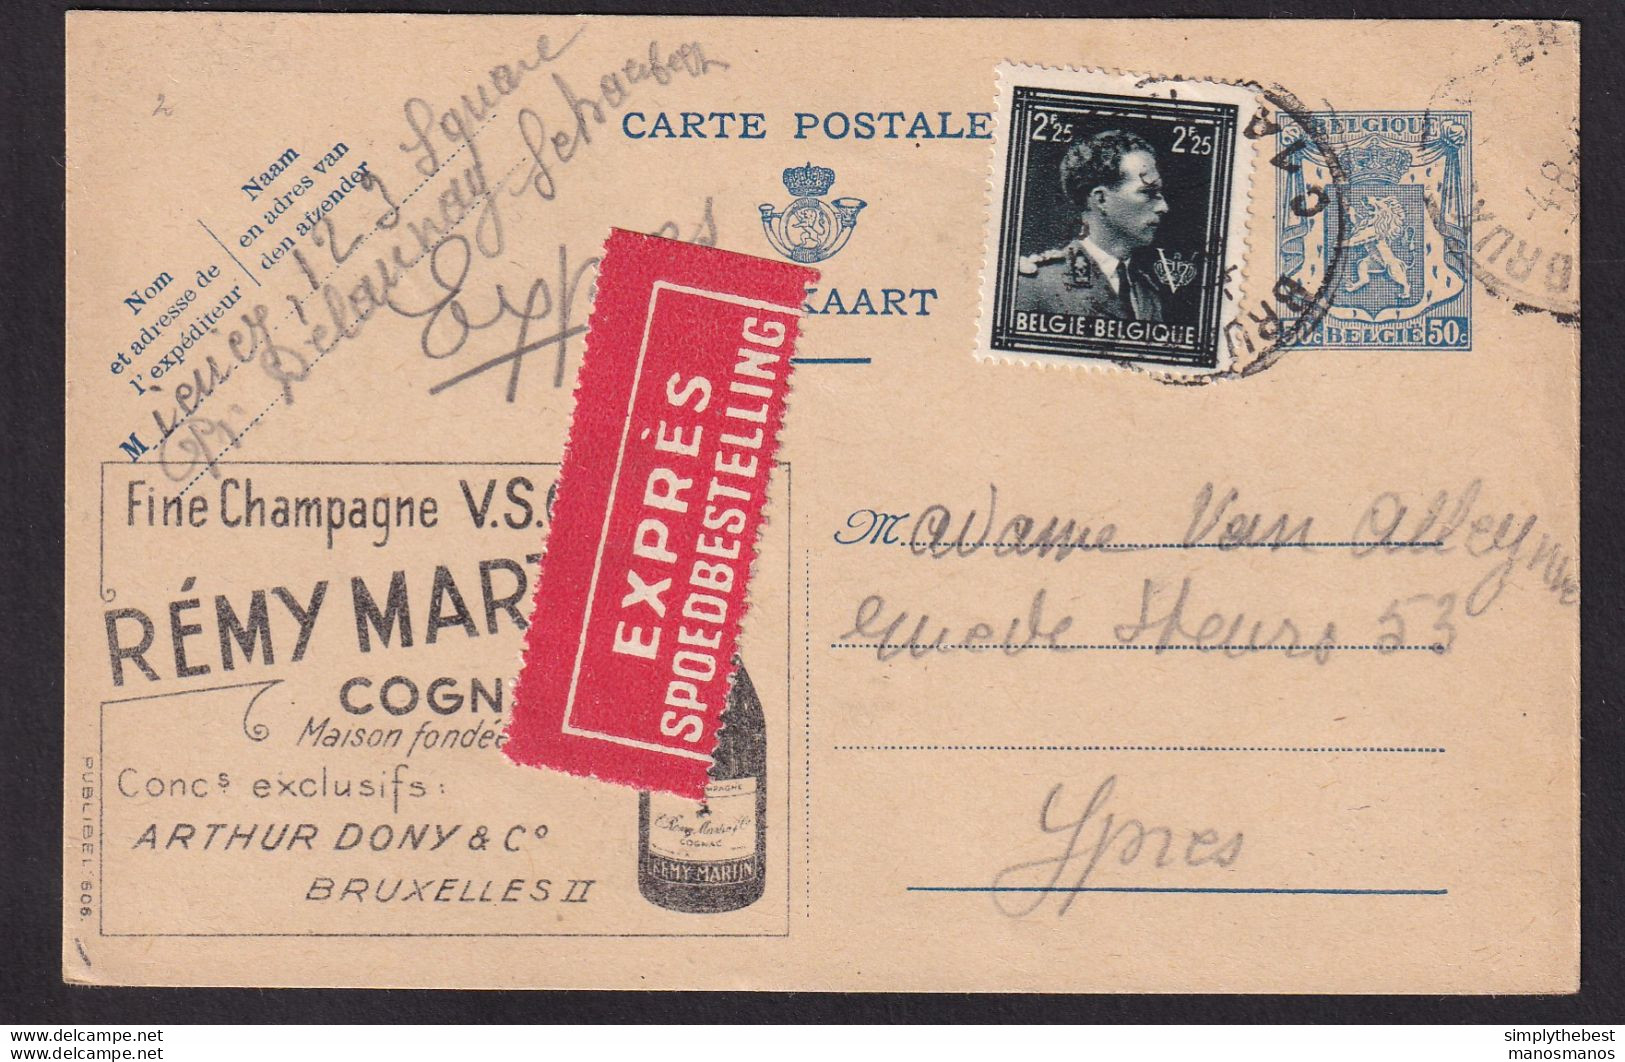 DDBB 626 -- Carte Publibel 606 Par EXPRES - Bruxelles 1945 Vers YPRES - Cognac Remy Martin - Publibels